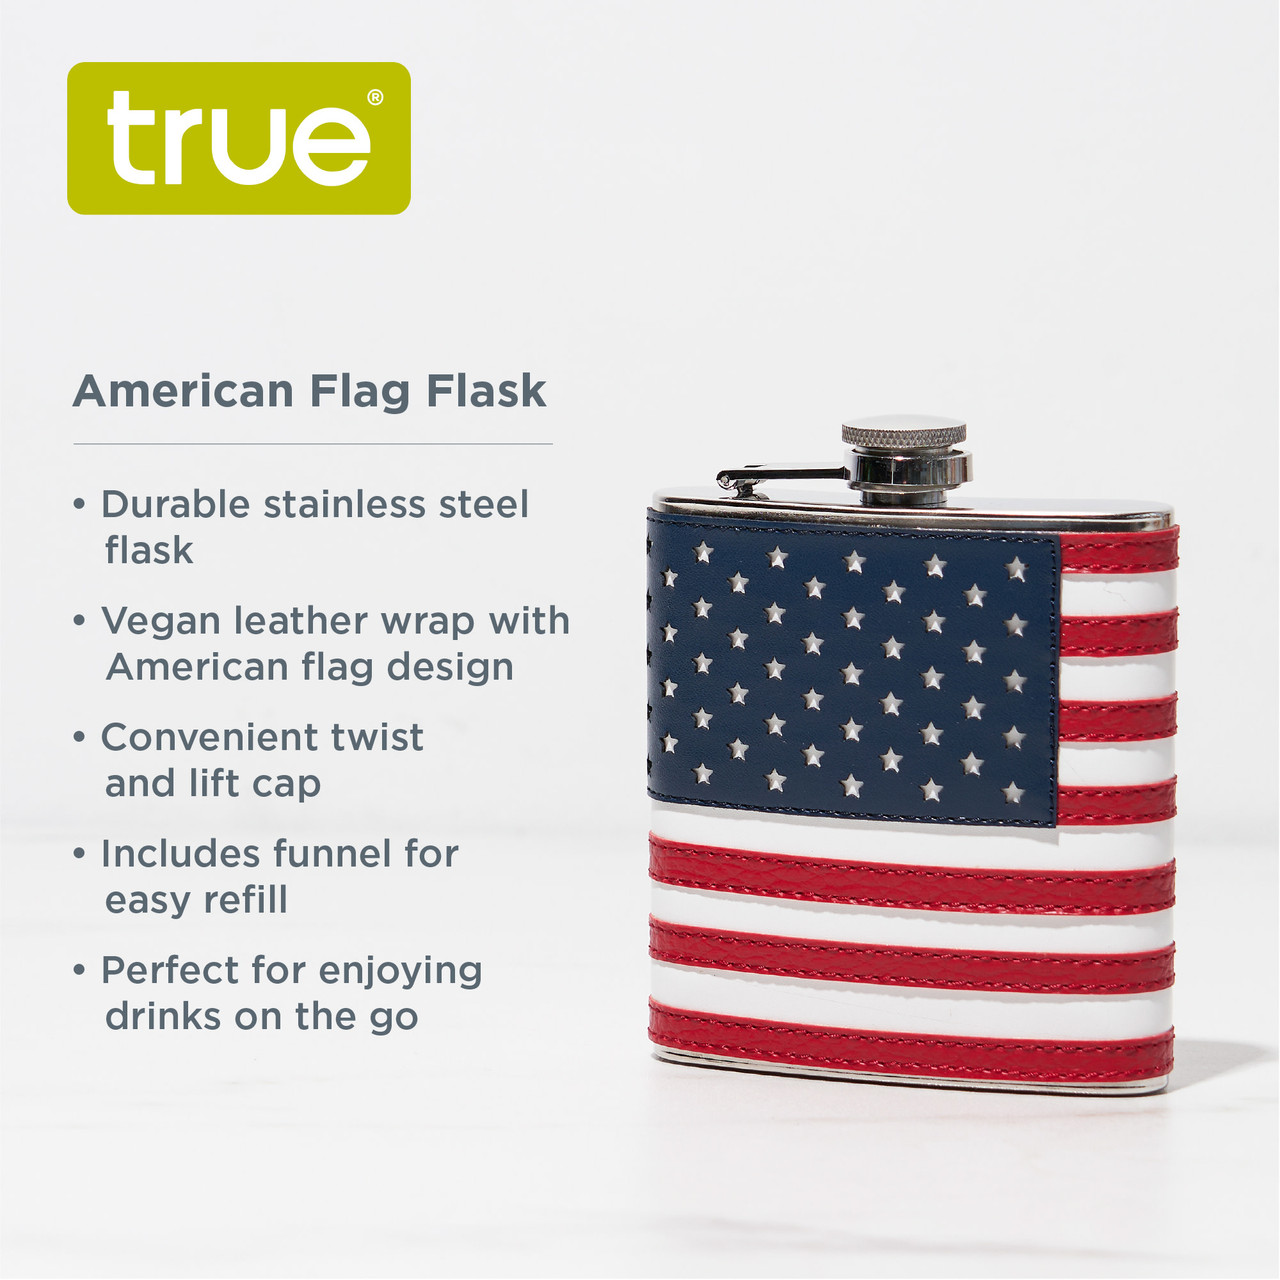 American Flag Flask by True